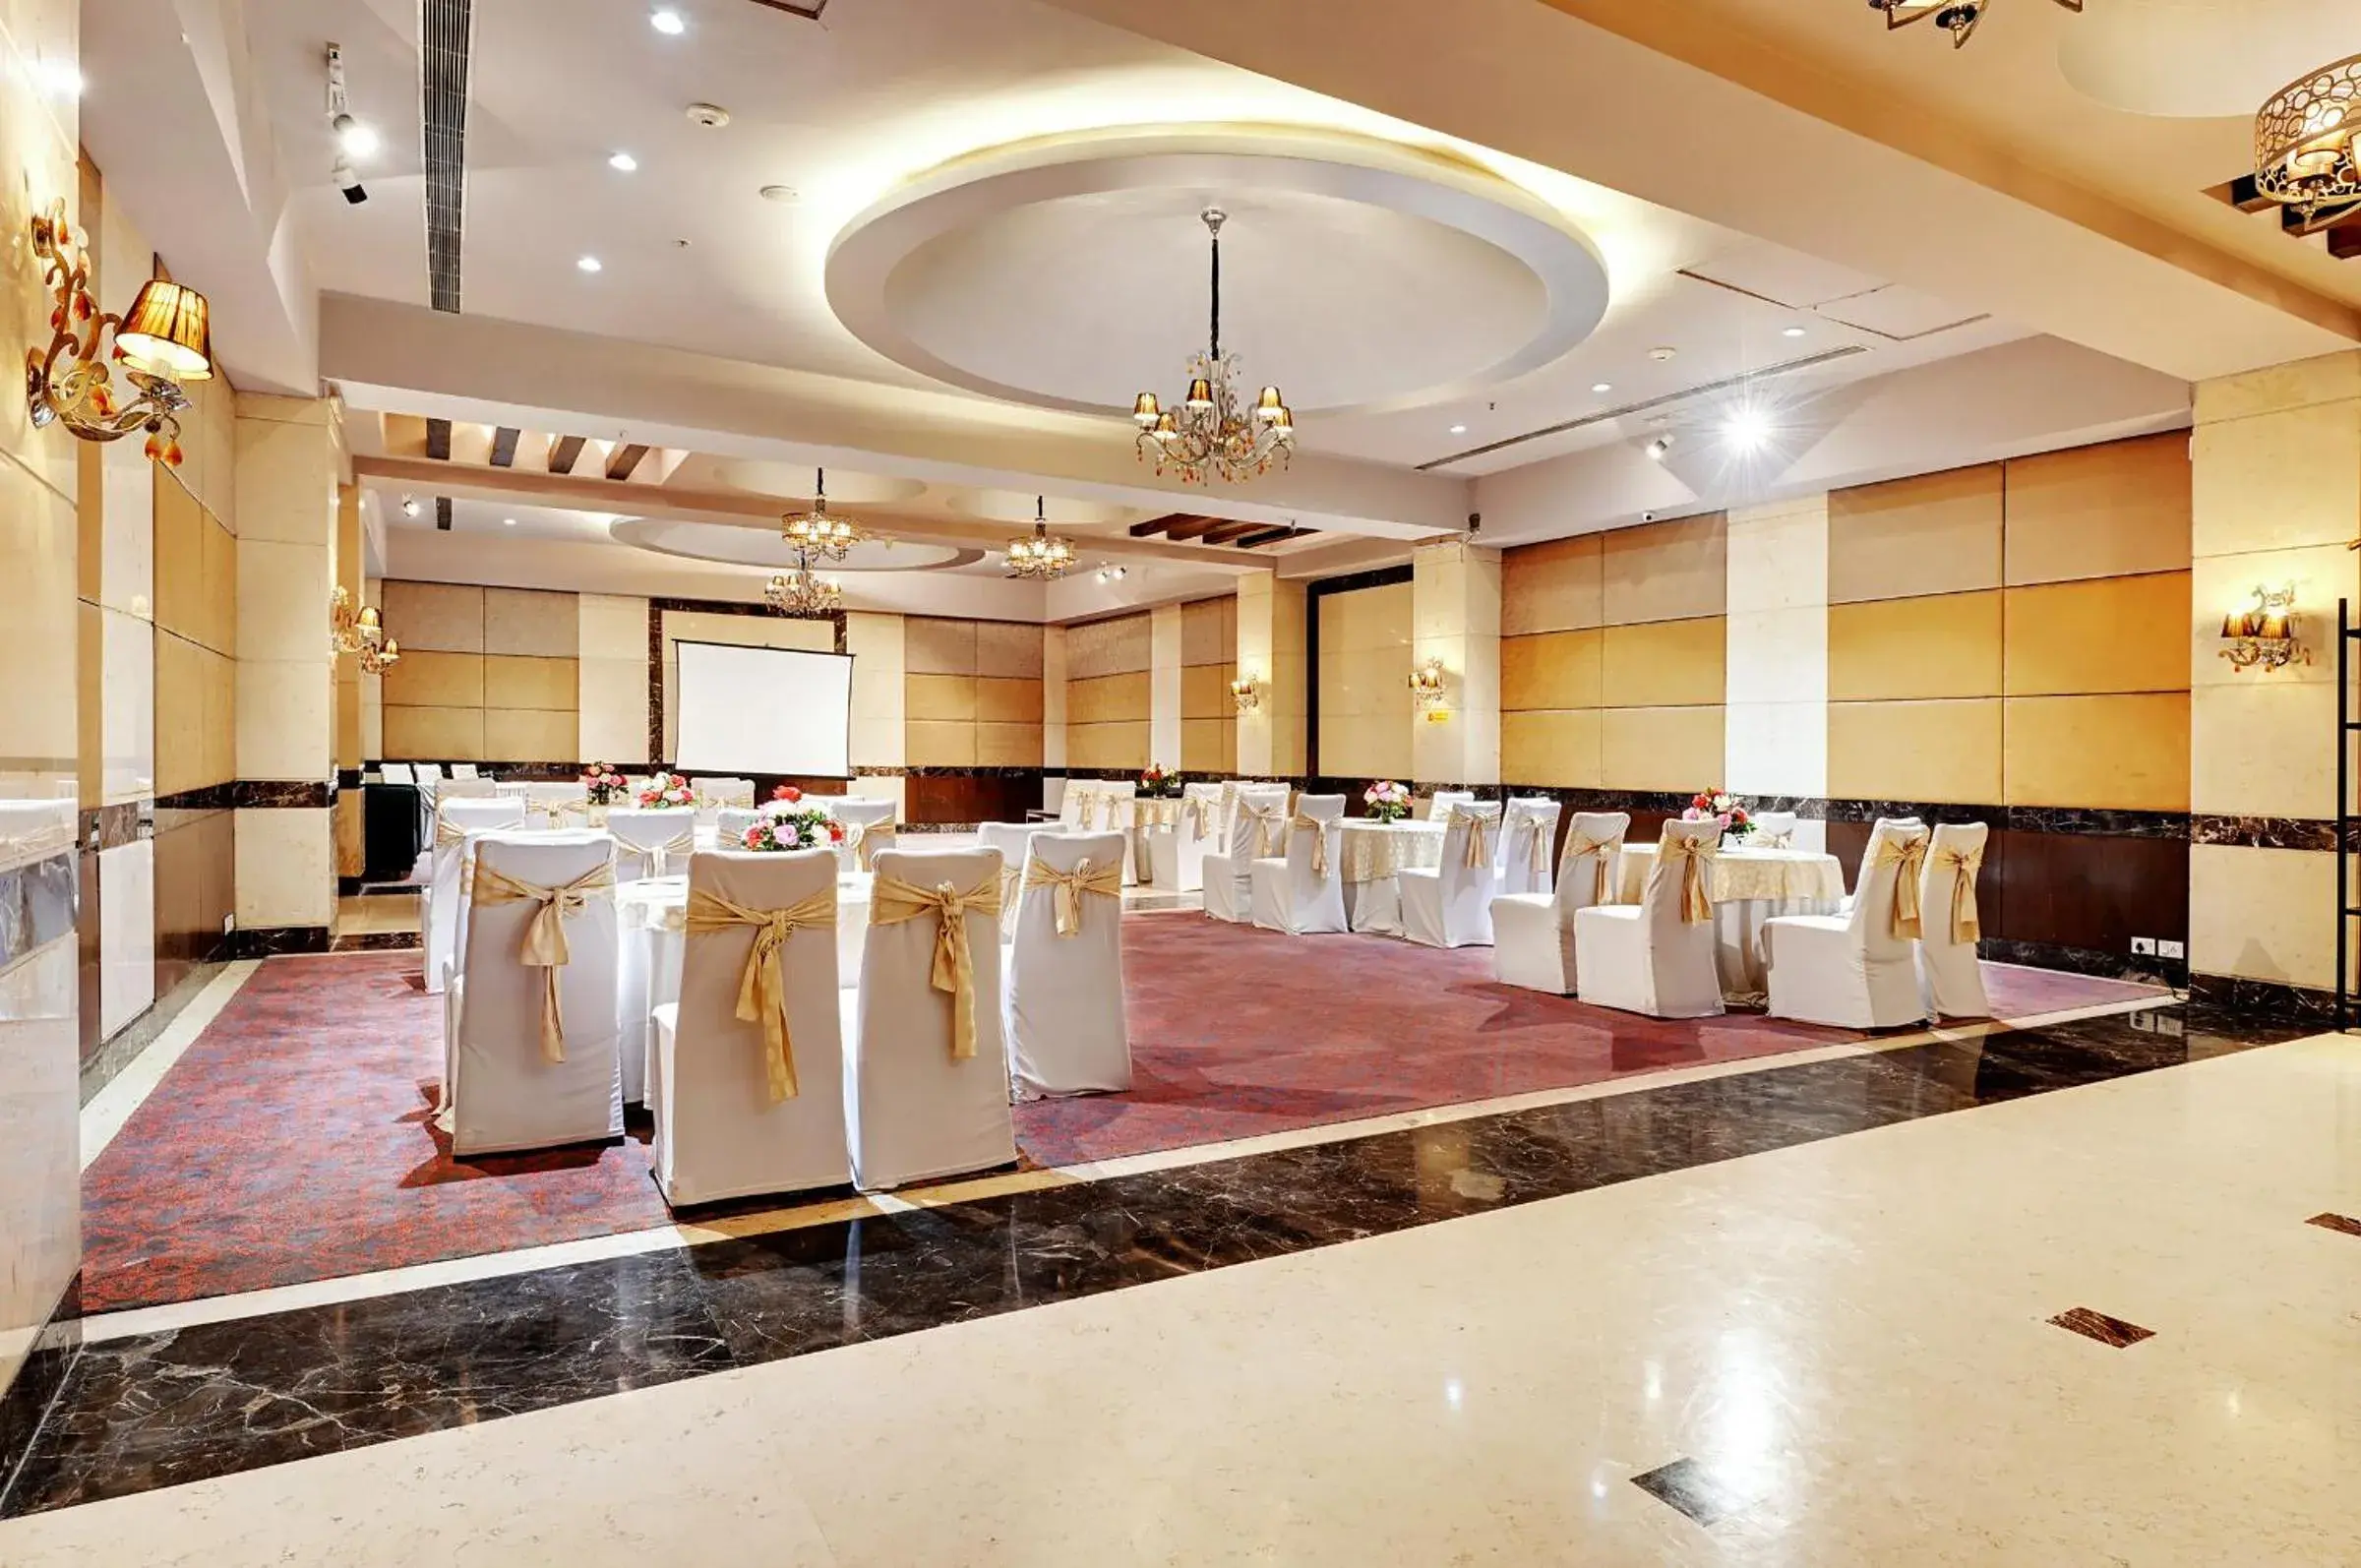 Banquet/Function facilities, Banquet Facilities in Quality Inn Gurgaon